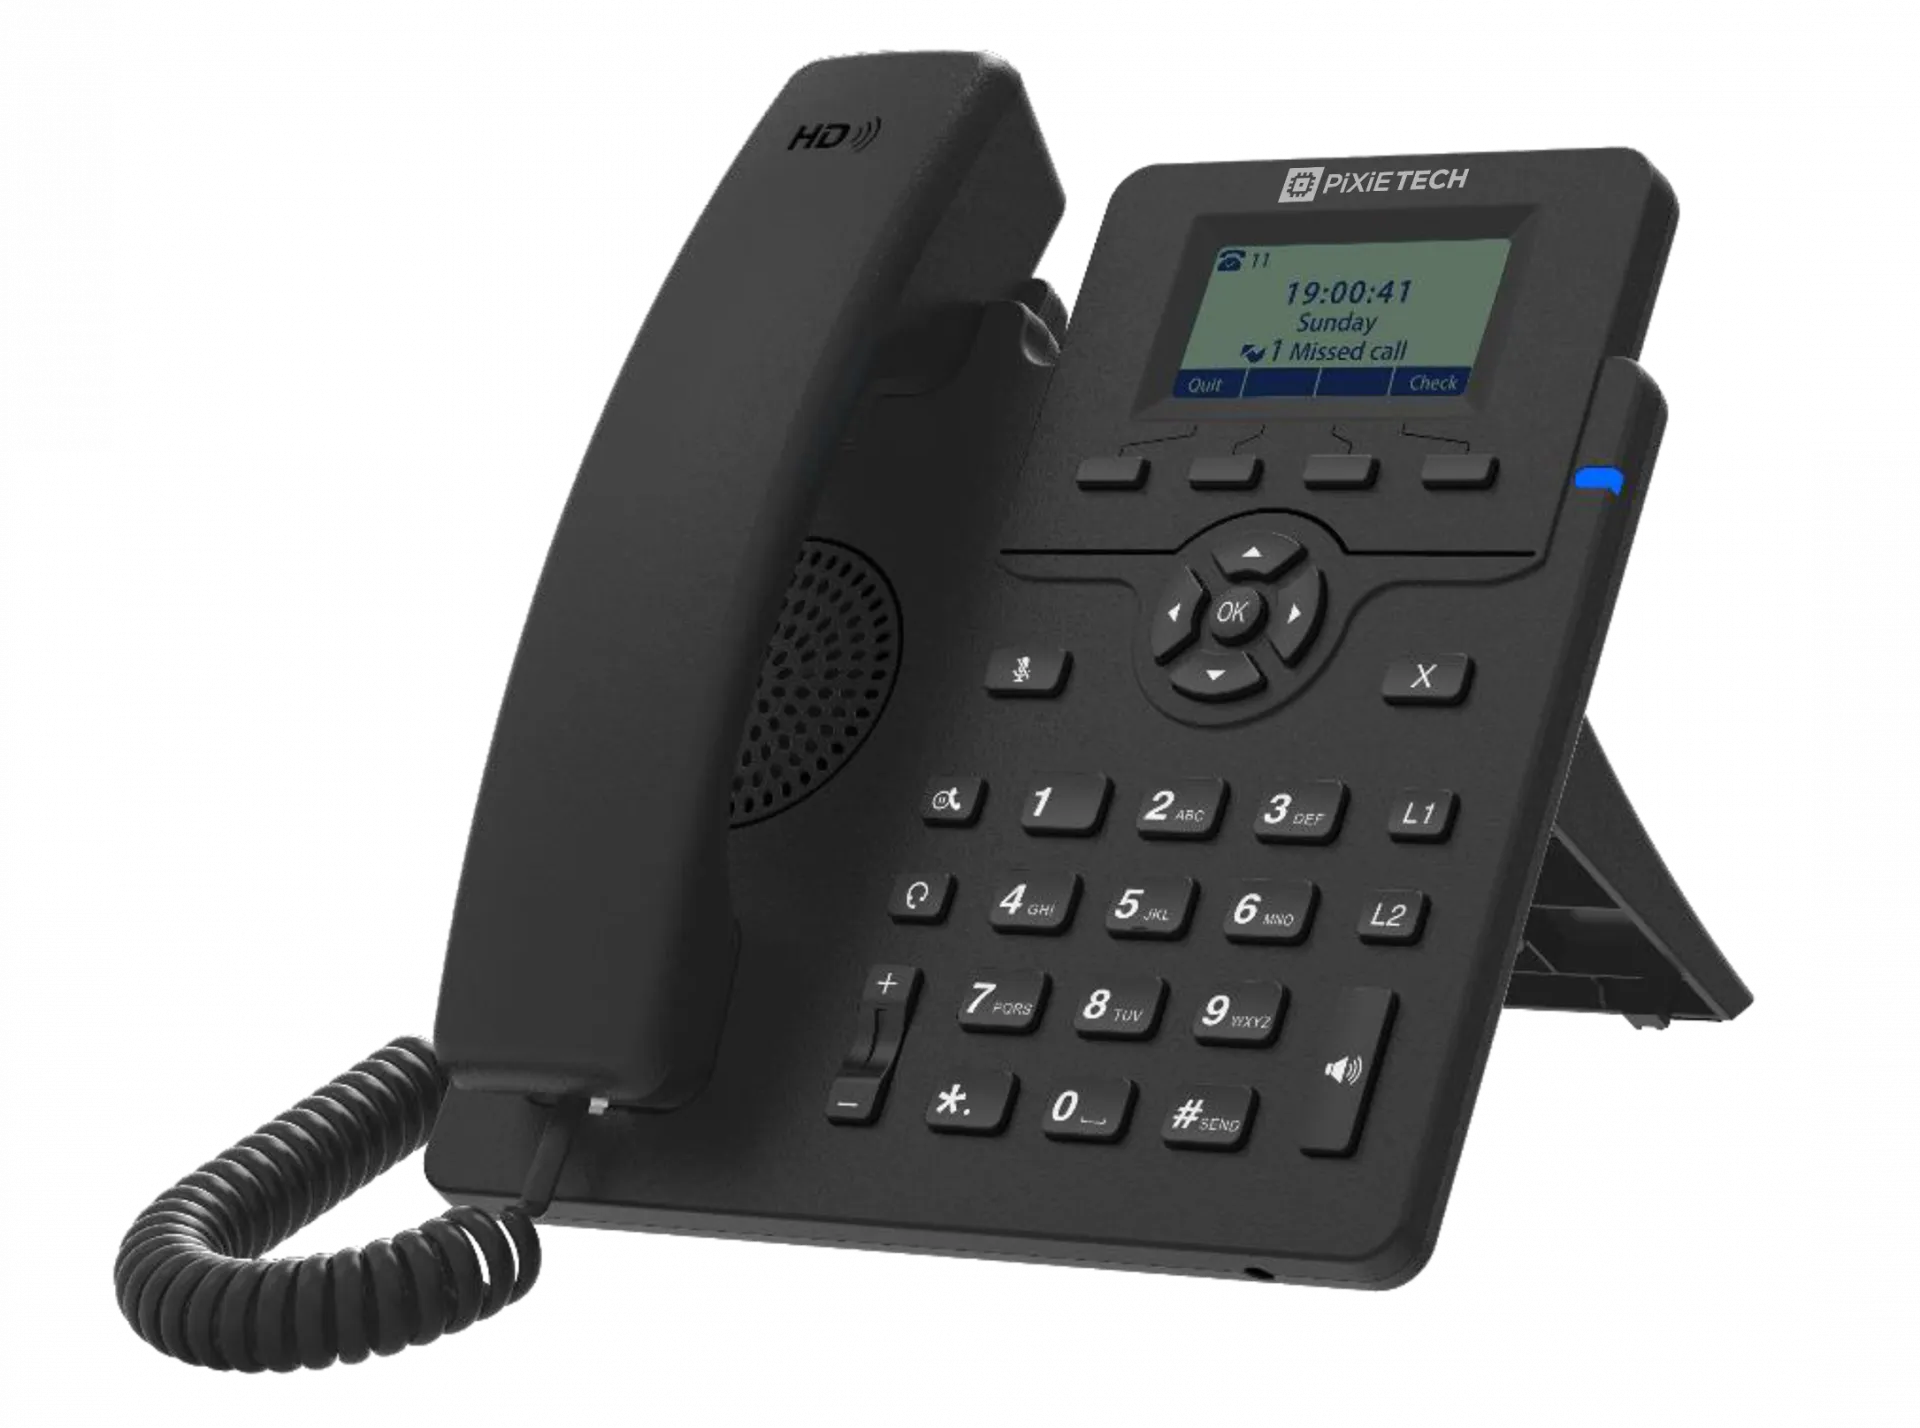 Pixietech PXT-12SP IP telefoni#1